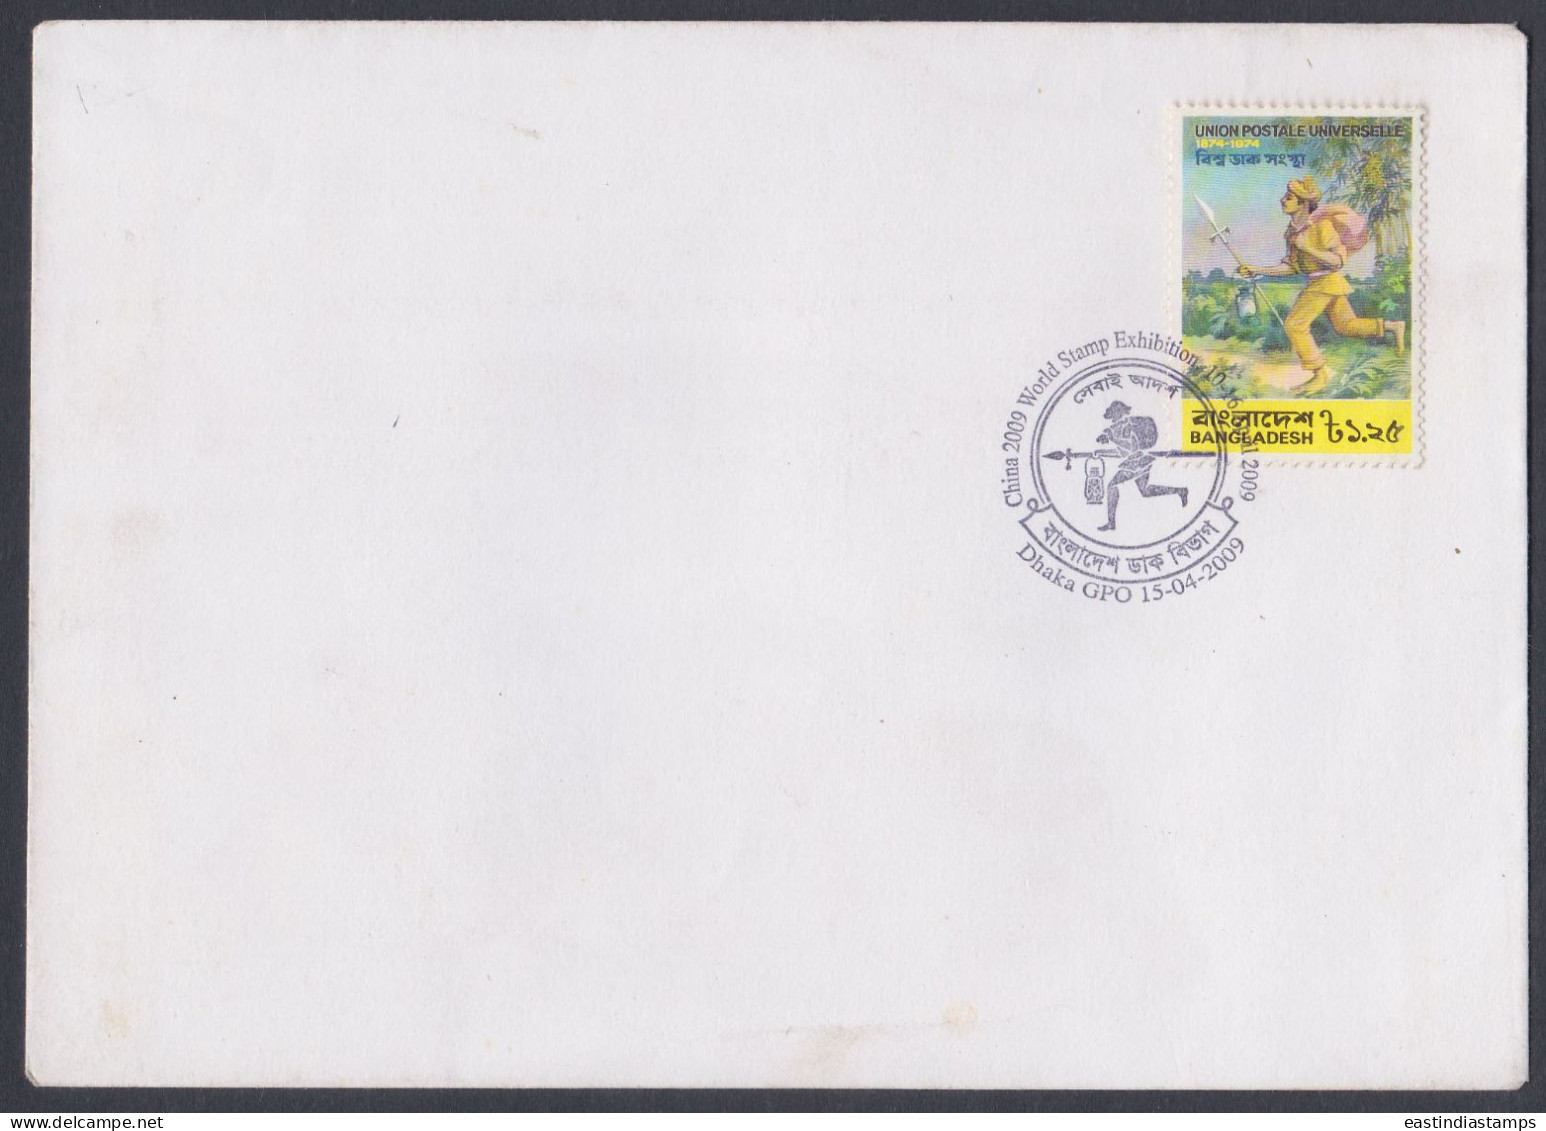 Bangladesh 2009 FDC UPU, China, World Stamp Exhibition, First Day Cover - Bangladesh